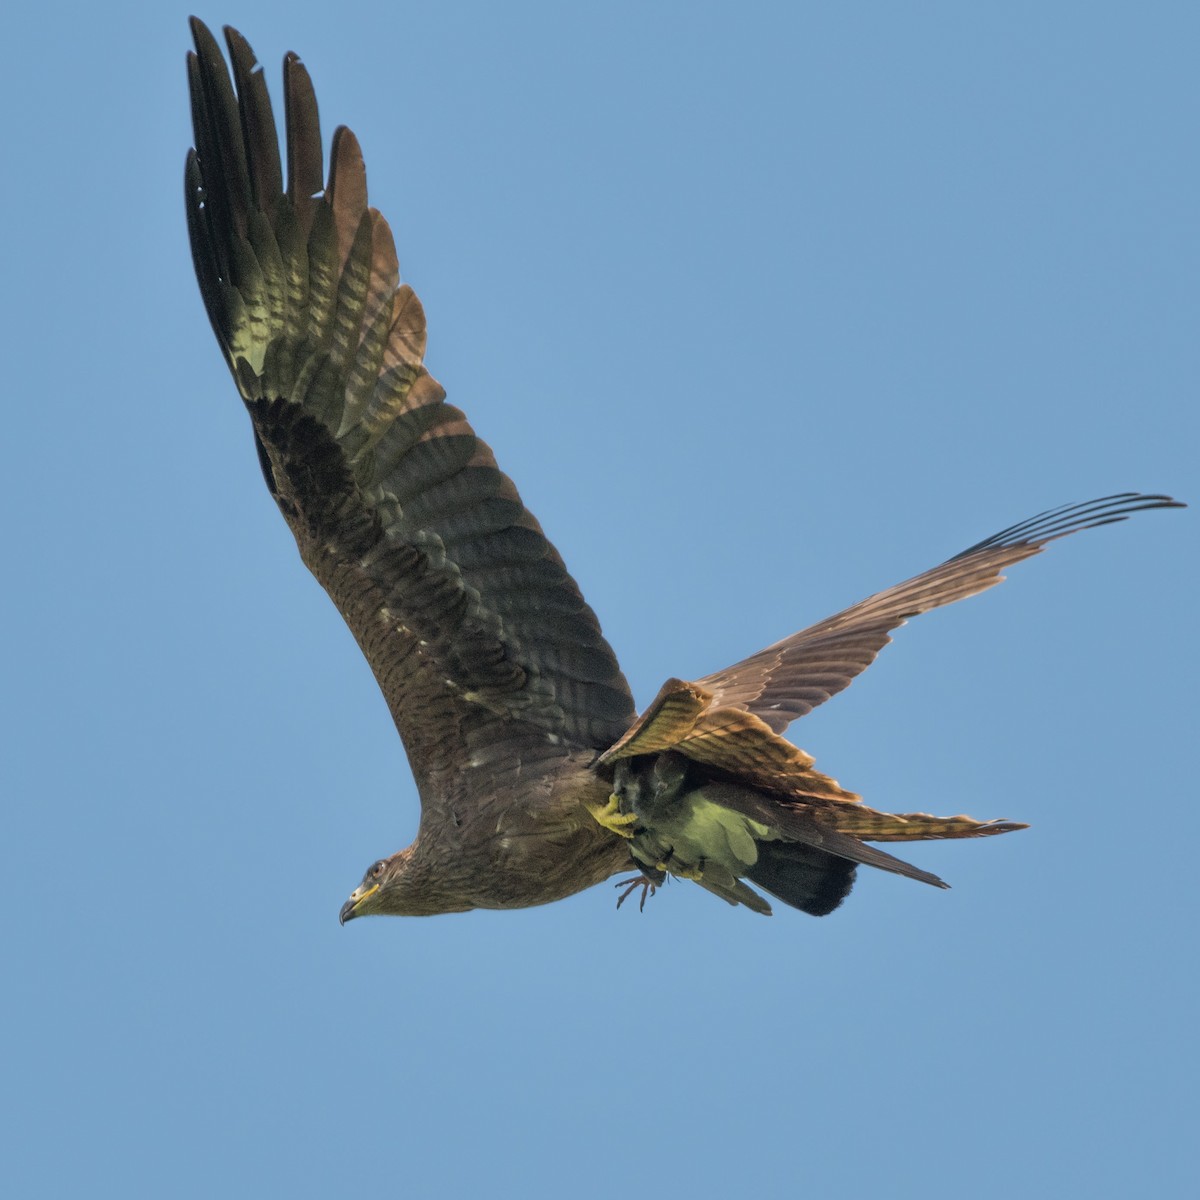 Black Kite - Arun Vignesh C S